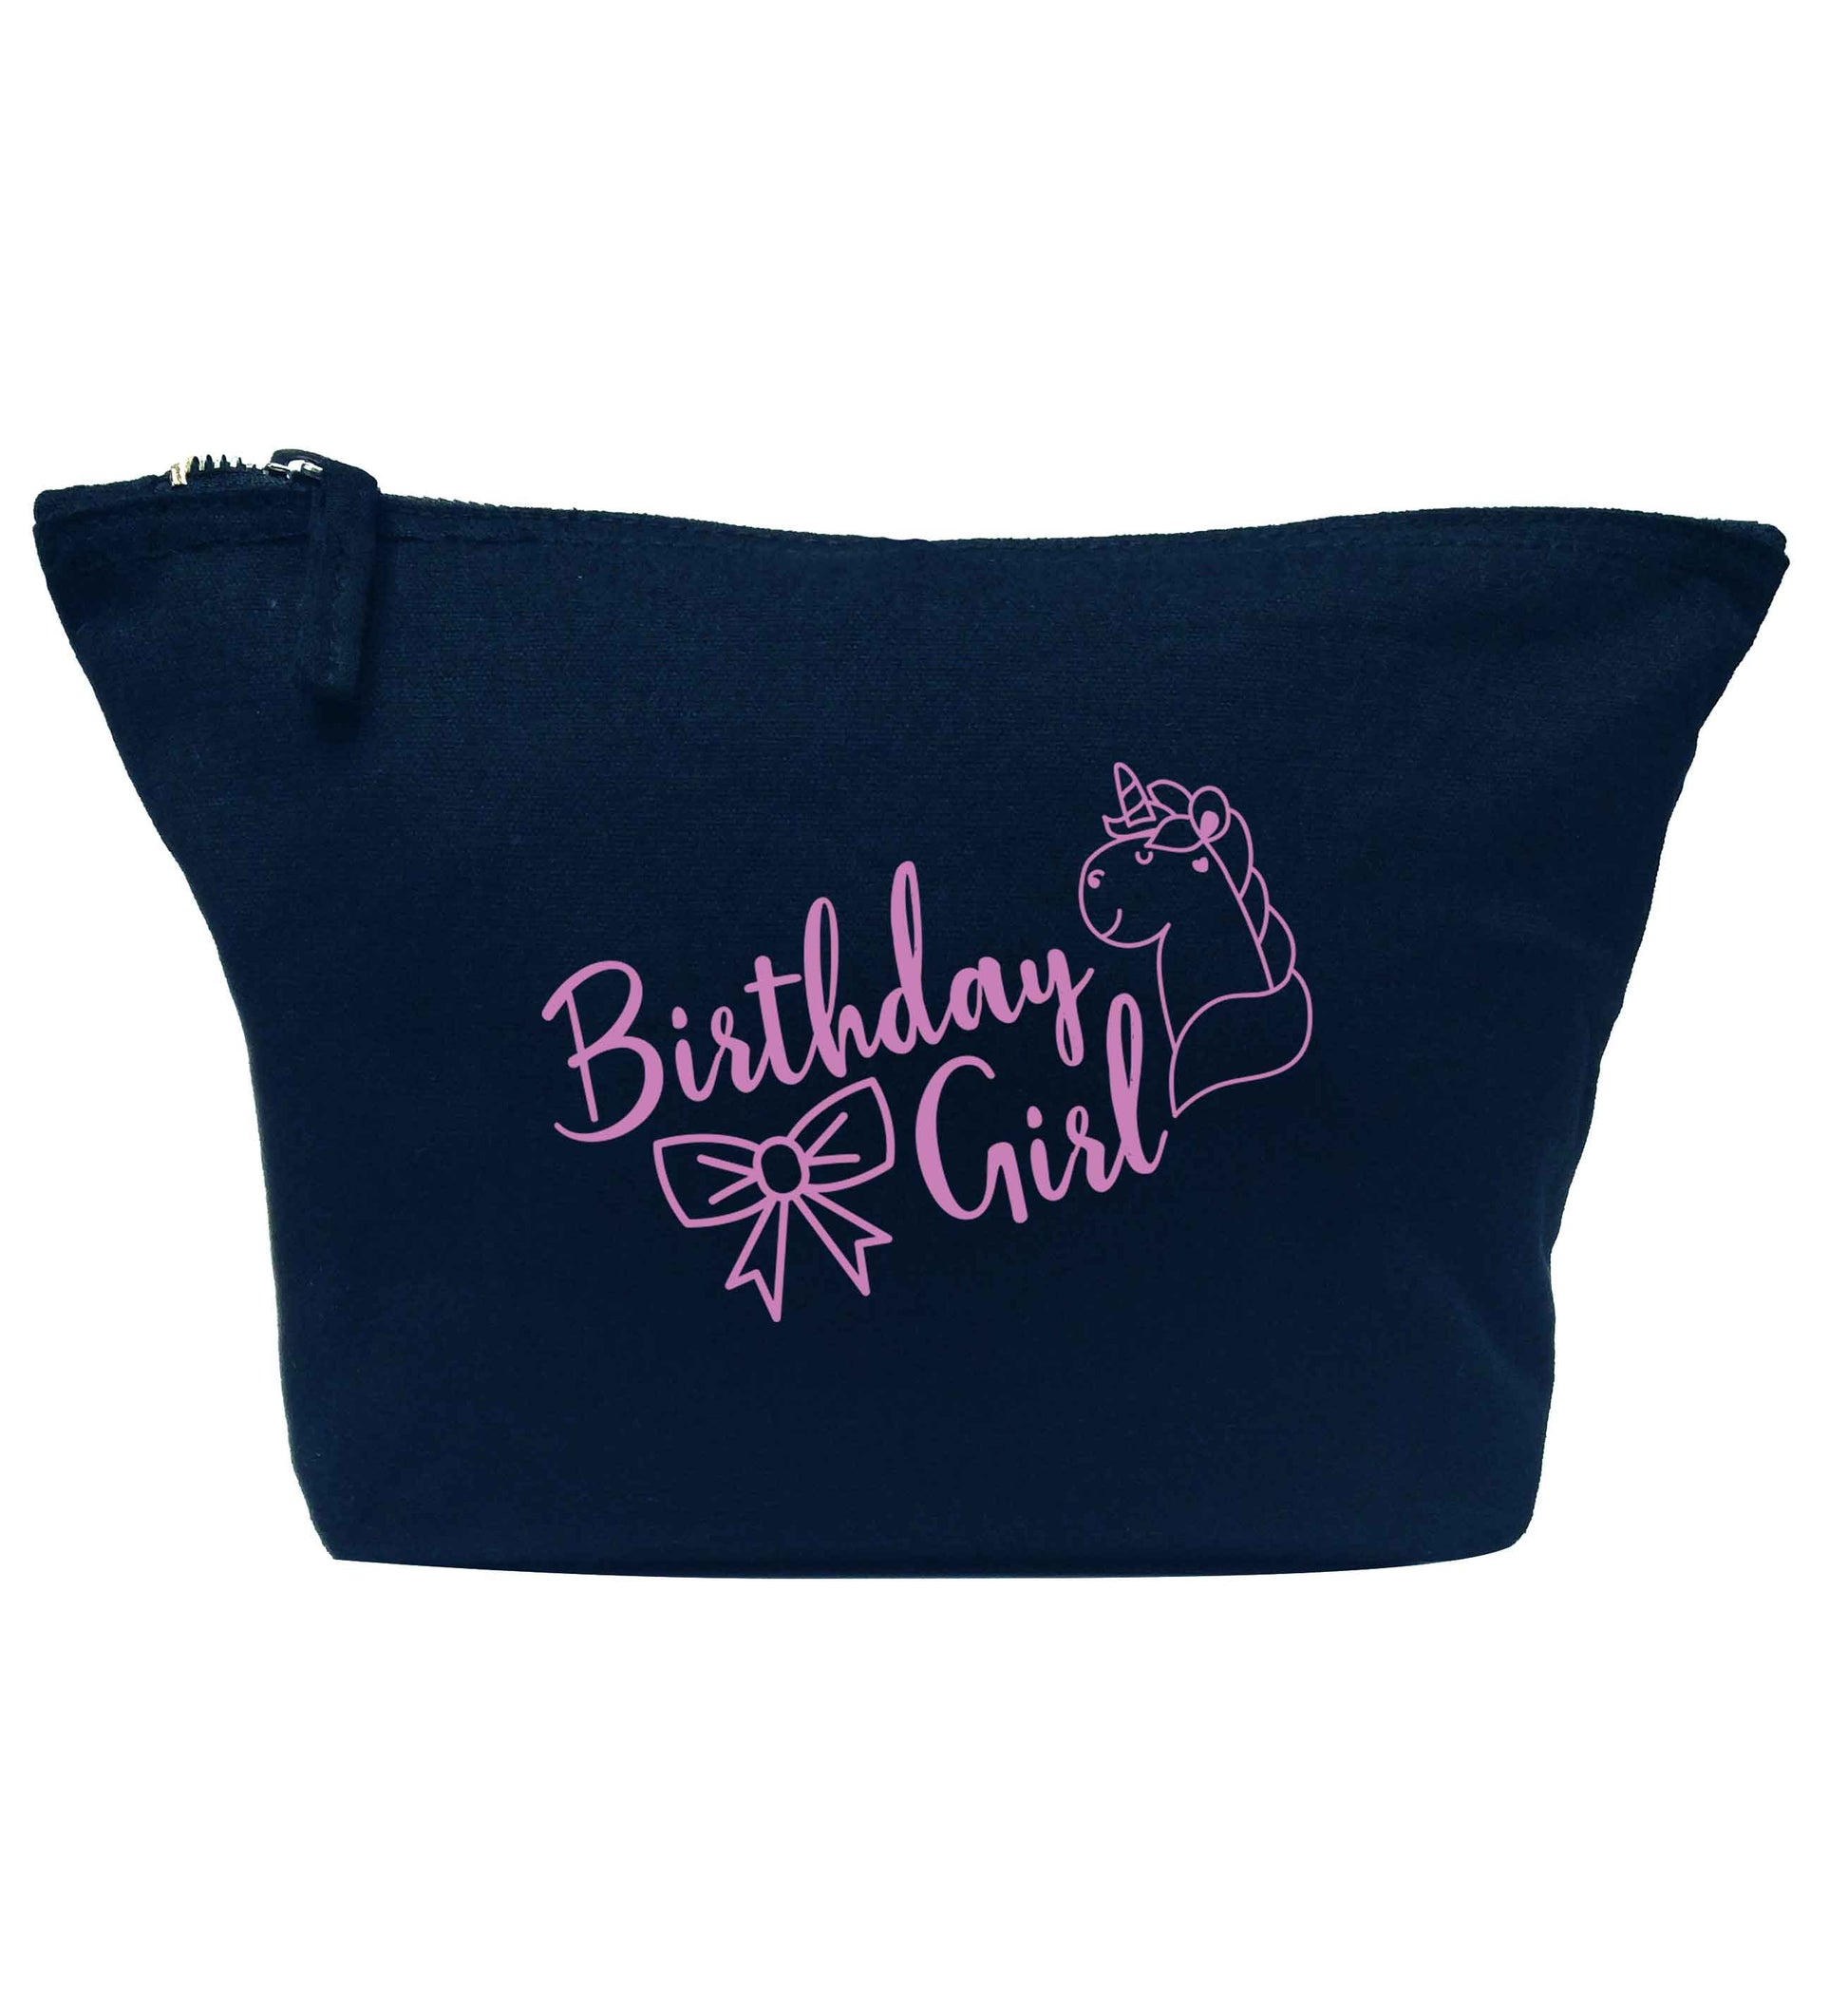 Birthday girl navy makeup bag